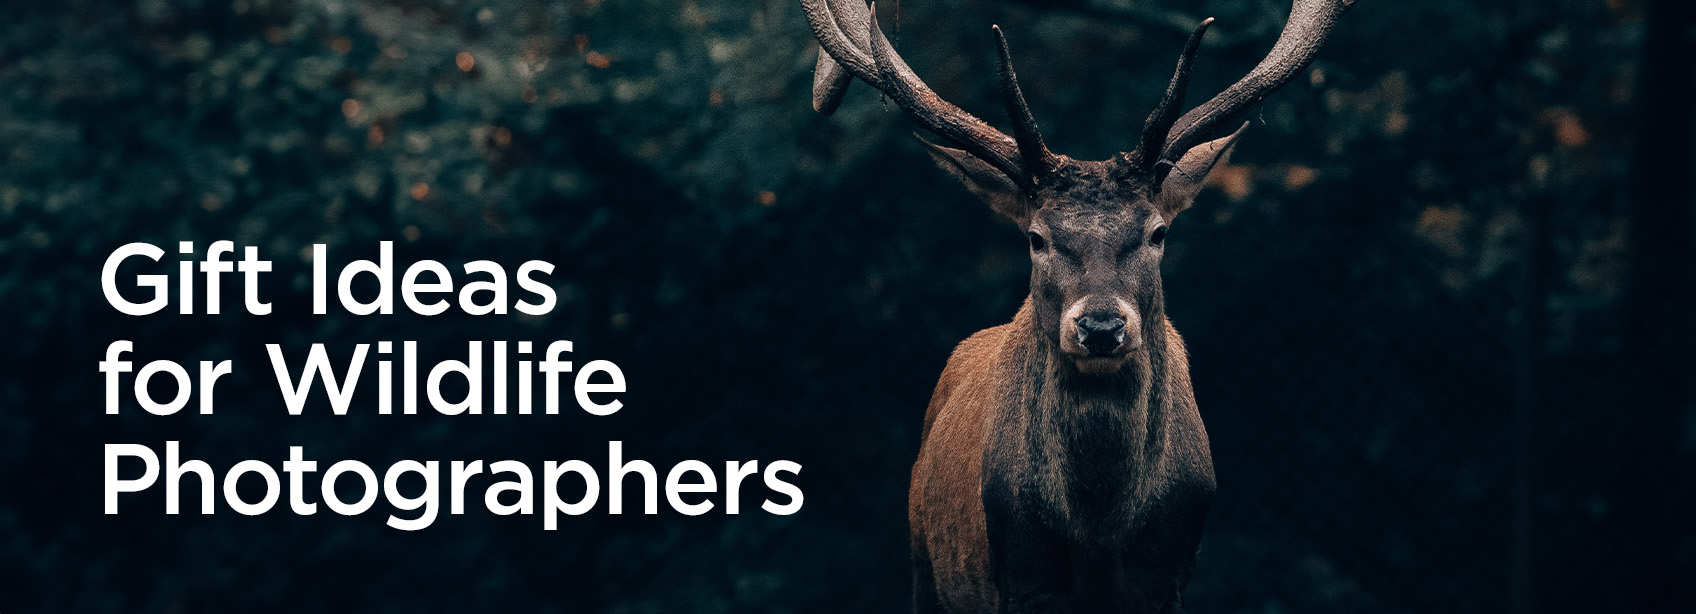 Gift Ideas for Wildlife Photographers